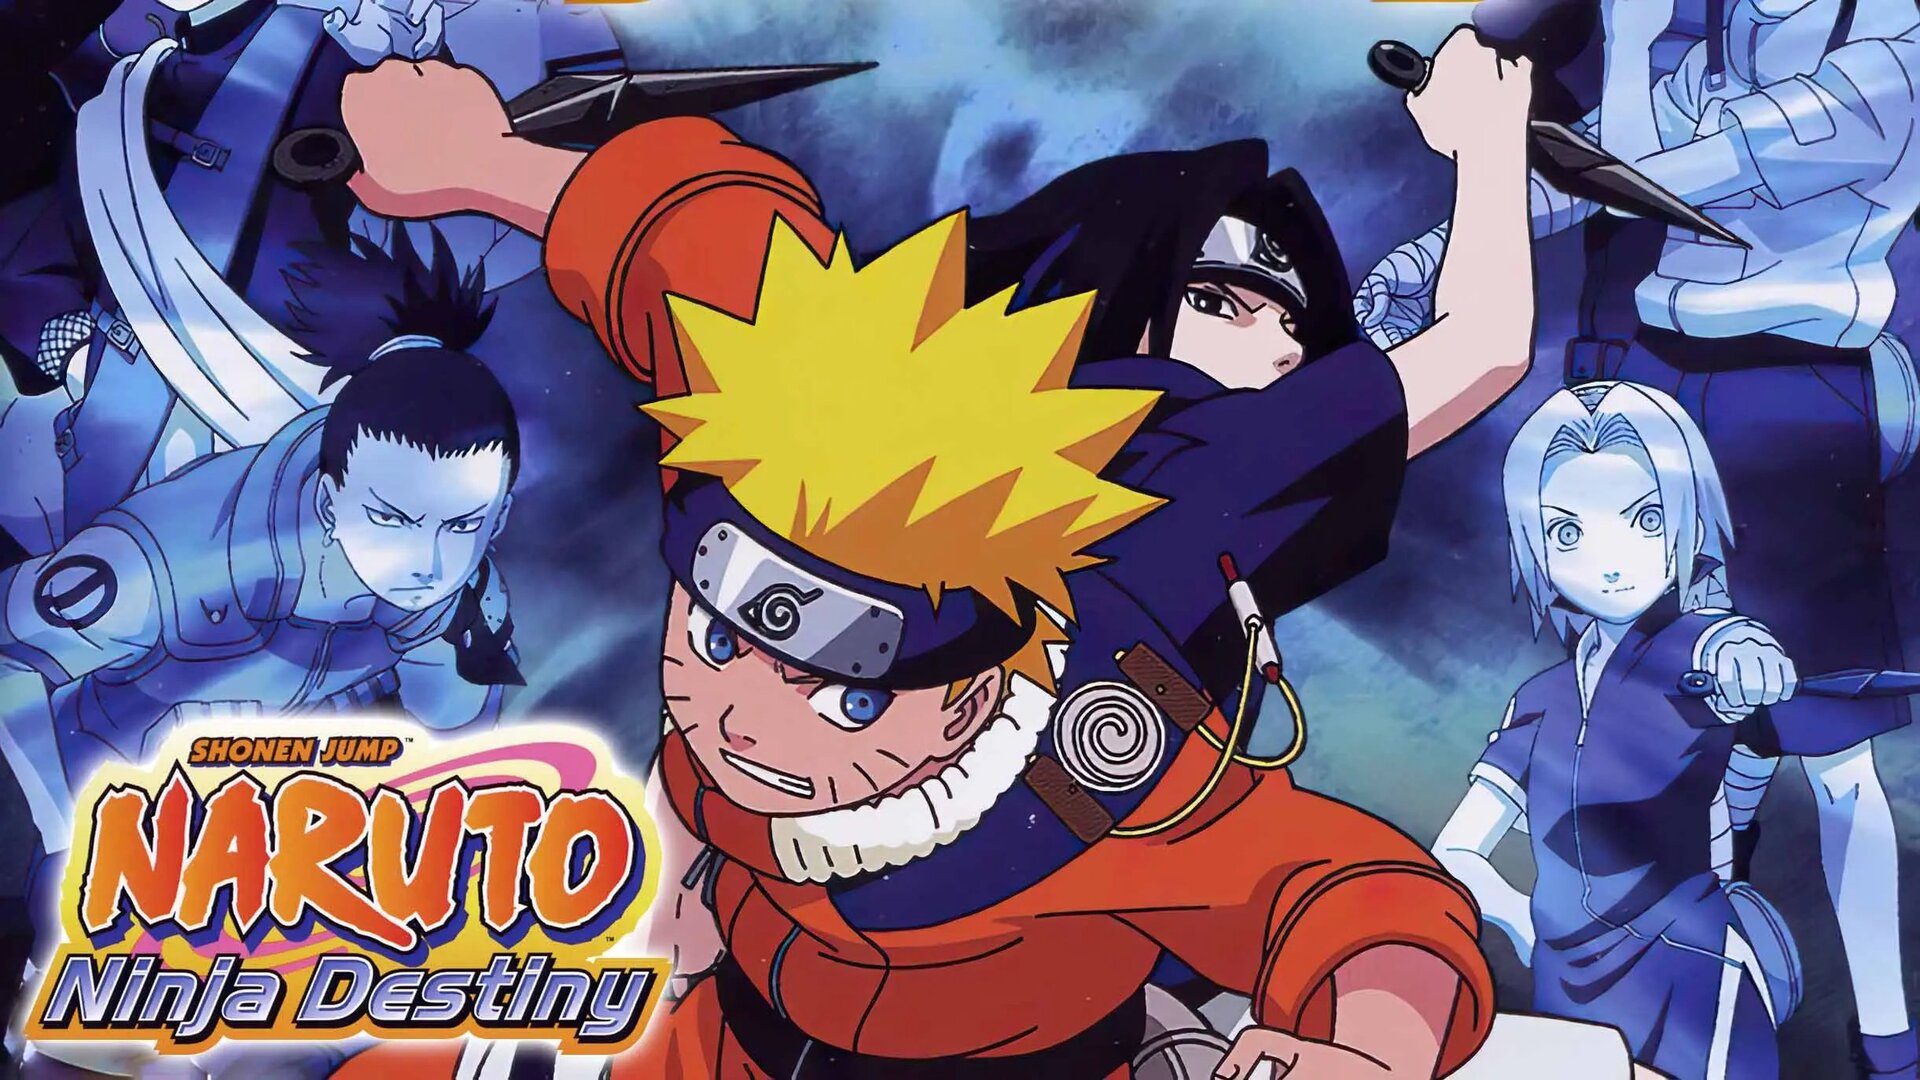 Todos-os-jogos-de-Naruto-ja-lancados-Ninja-Destiny